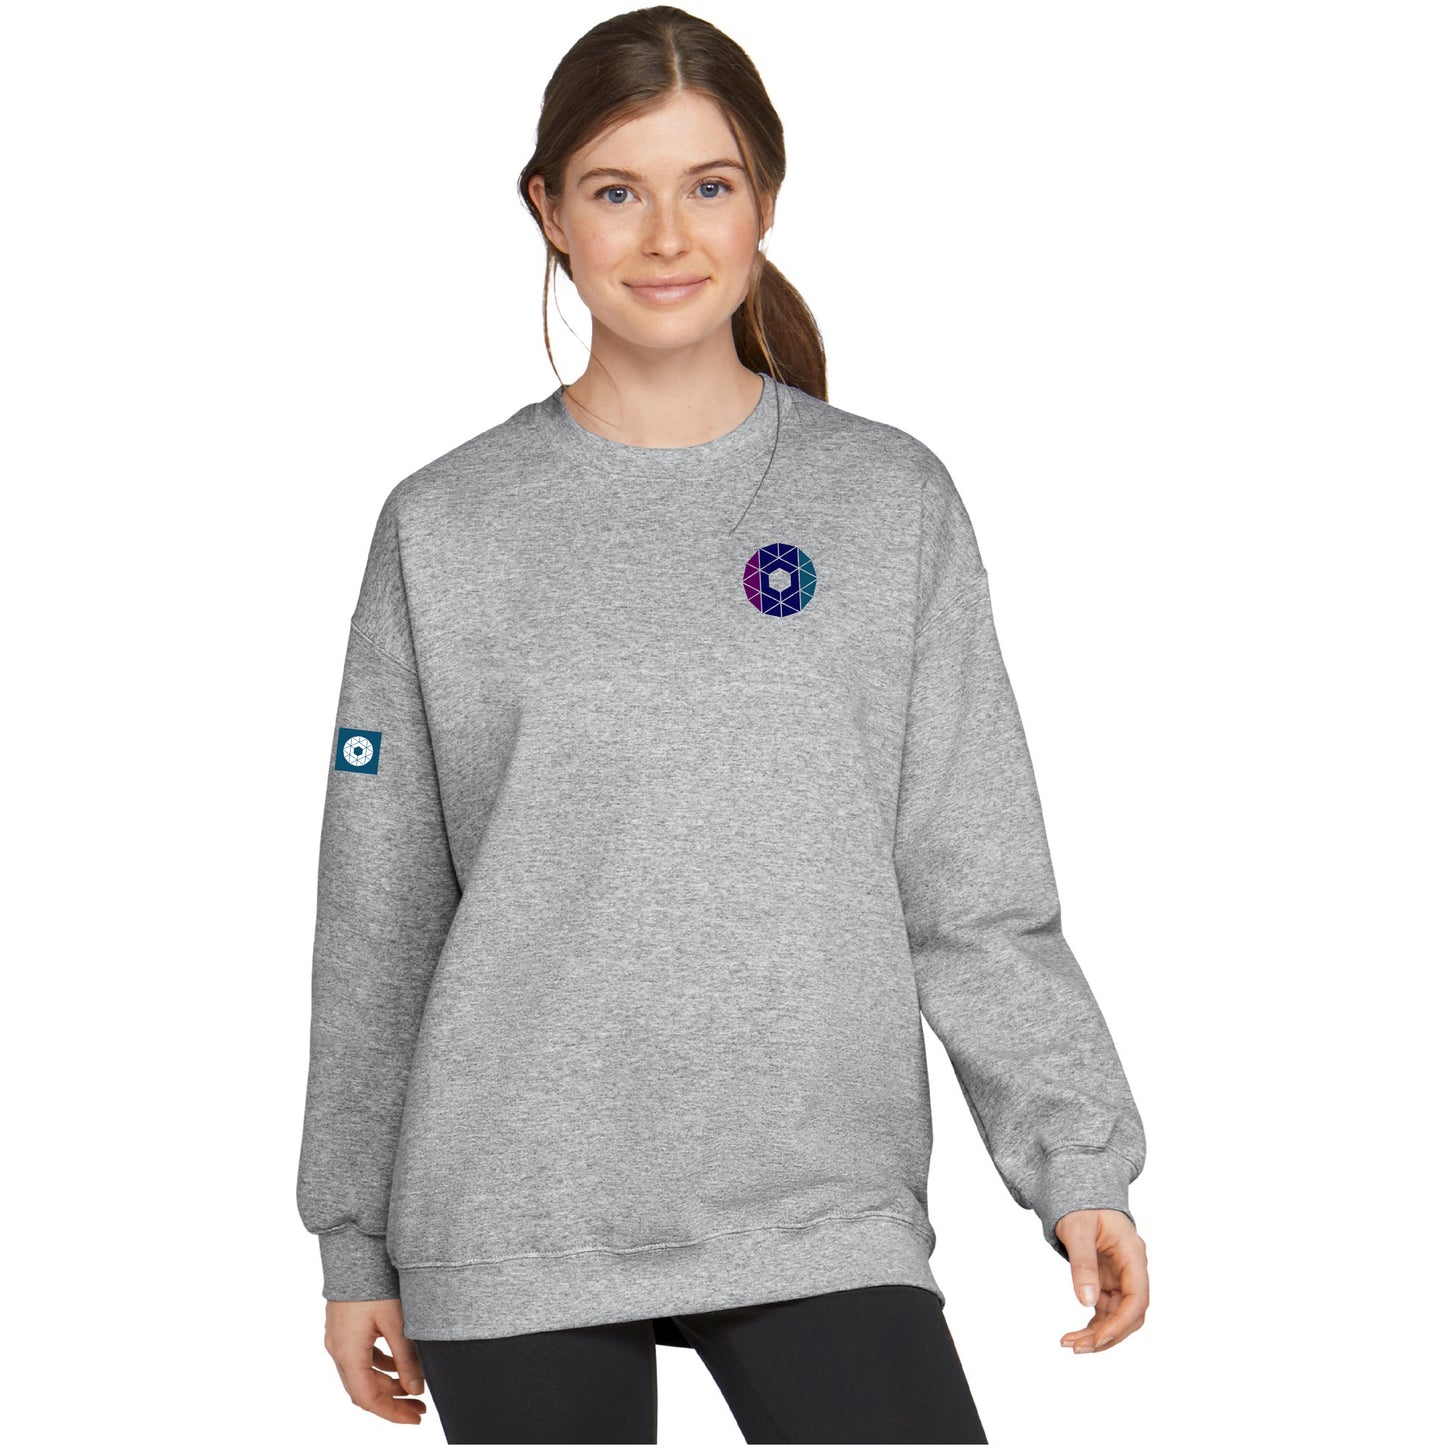 Sky Force Stellar Identity Sweatshirt